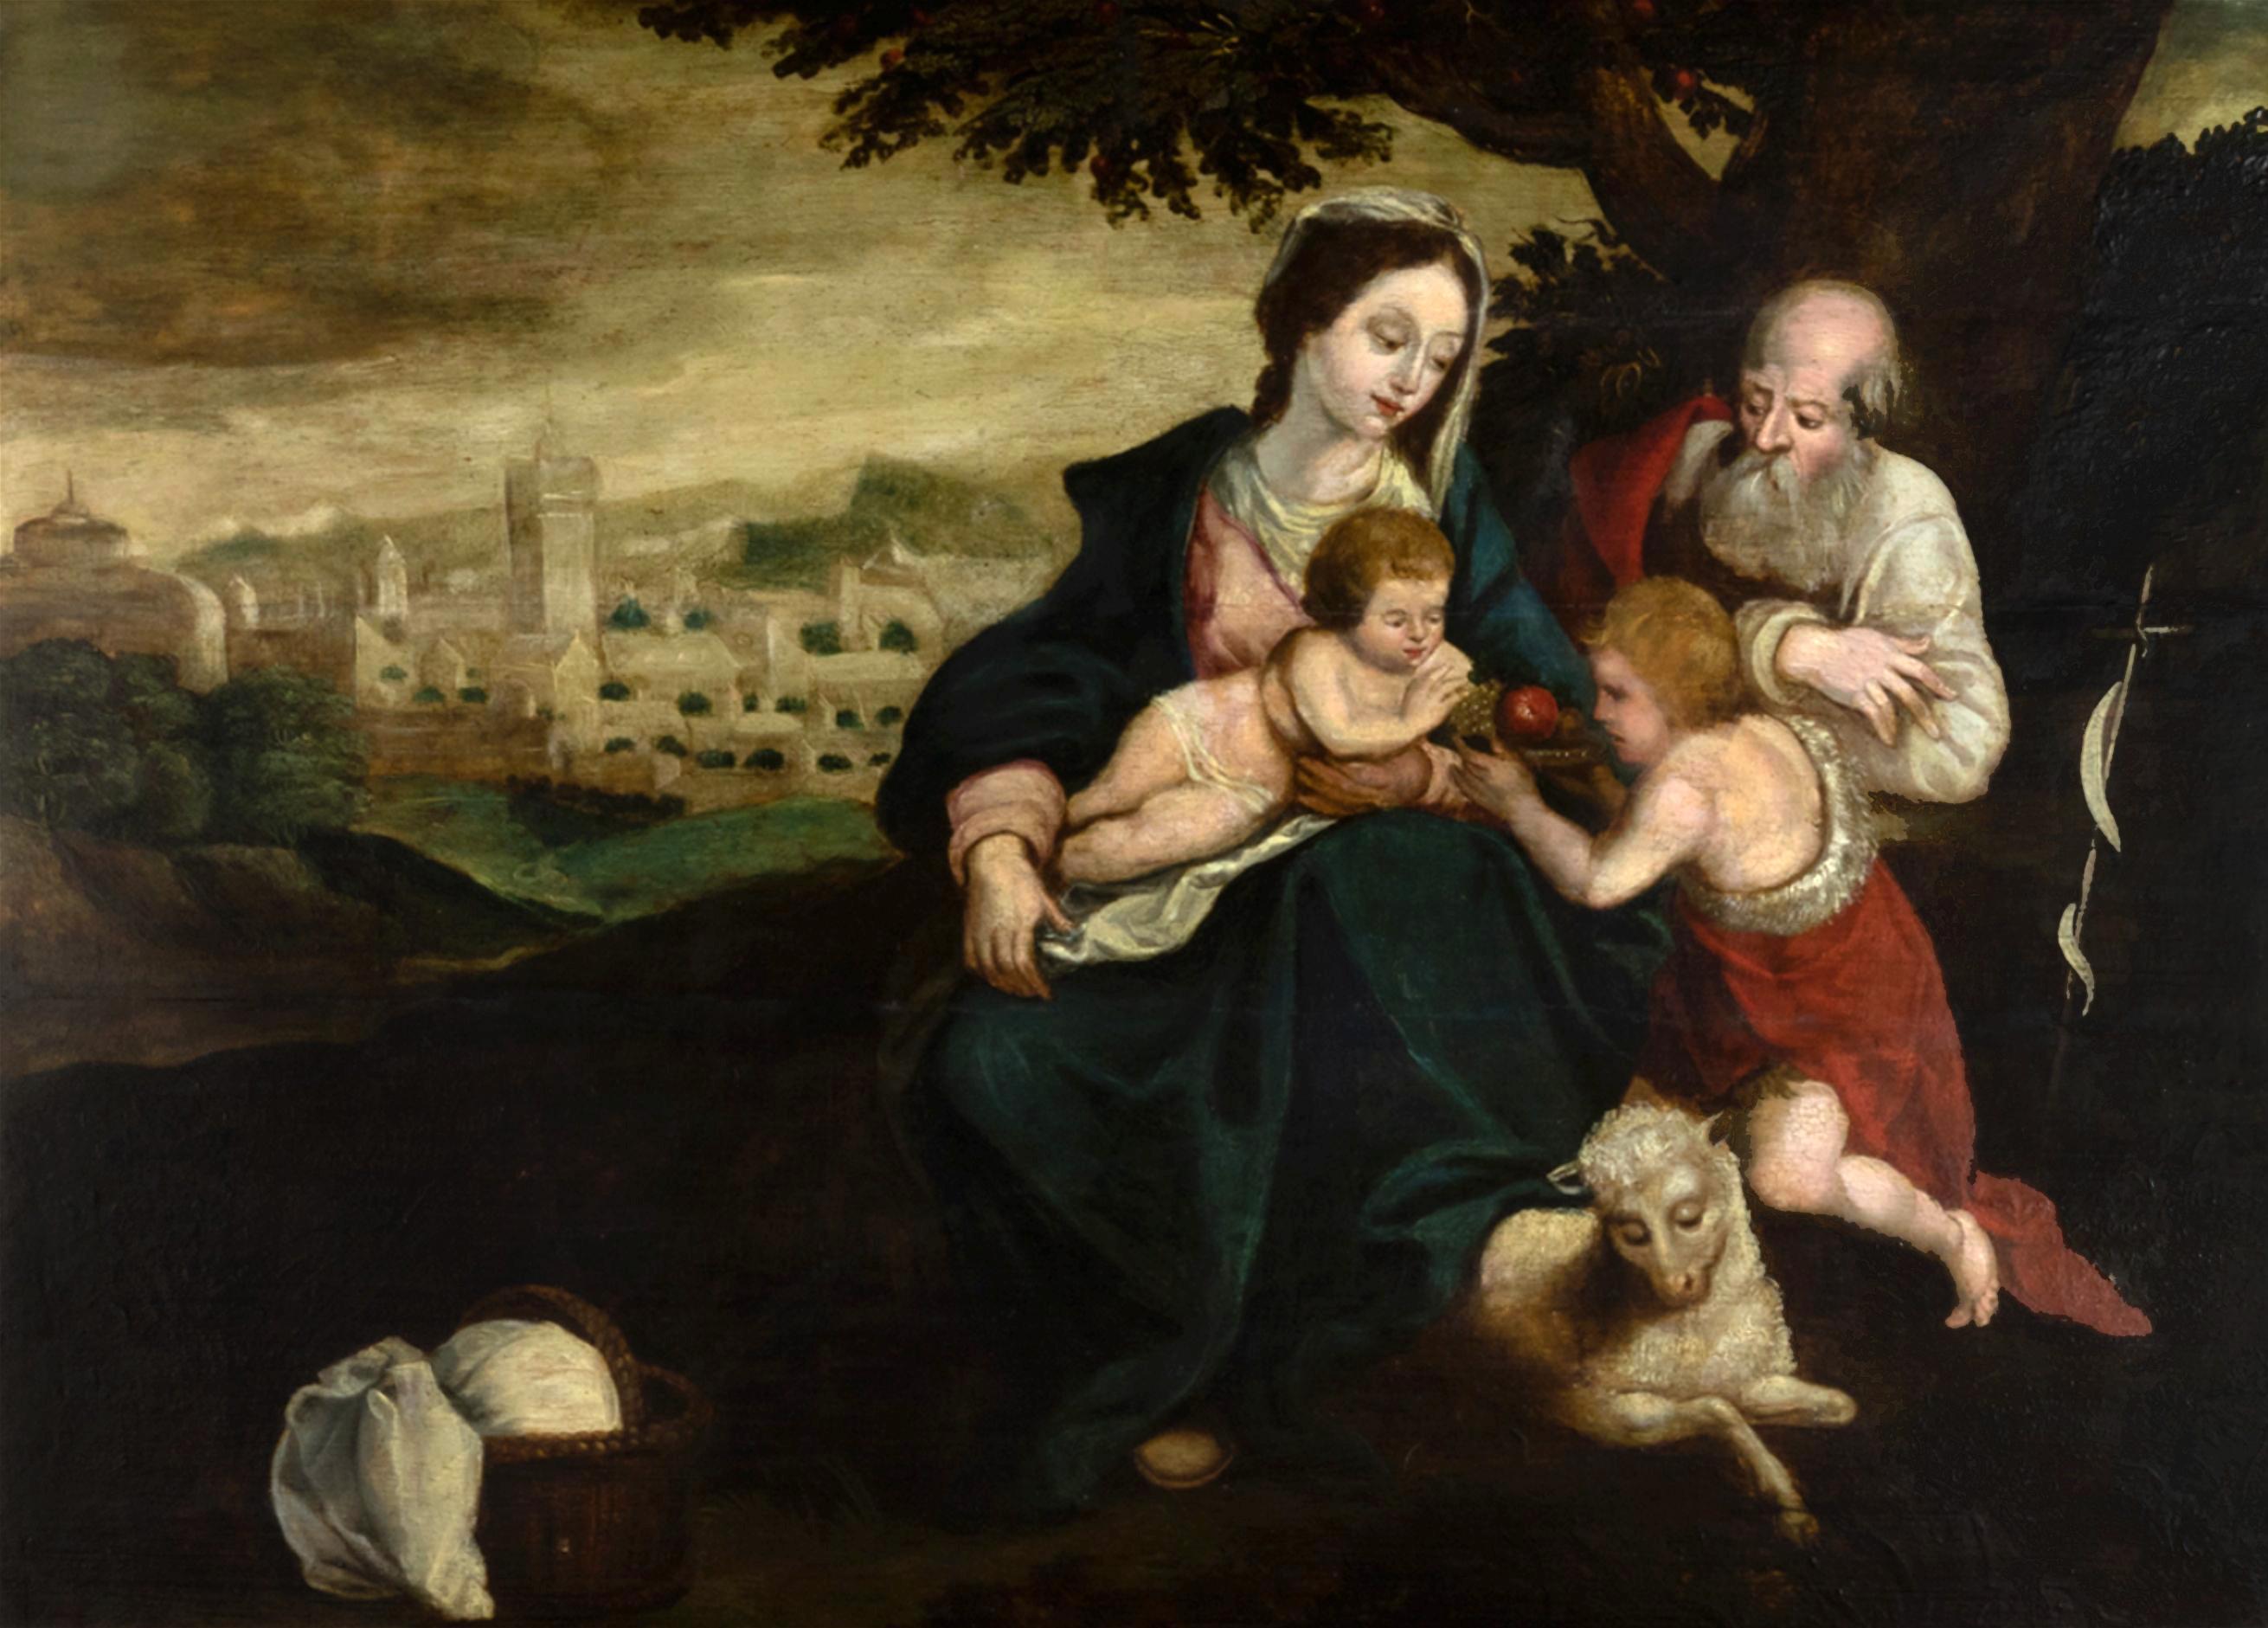 Huilé The Holy Family And Saint John The Baptist Painting 17th Century Religious Art (La Sainte Famille et Saint John Johns, peinture religieuse du 17e siècle) en vente